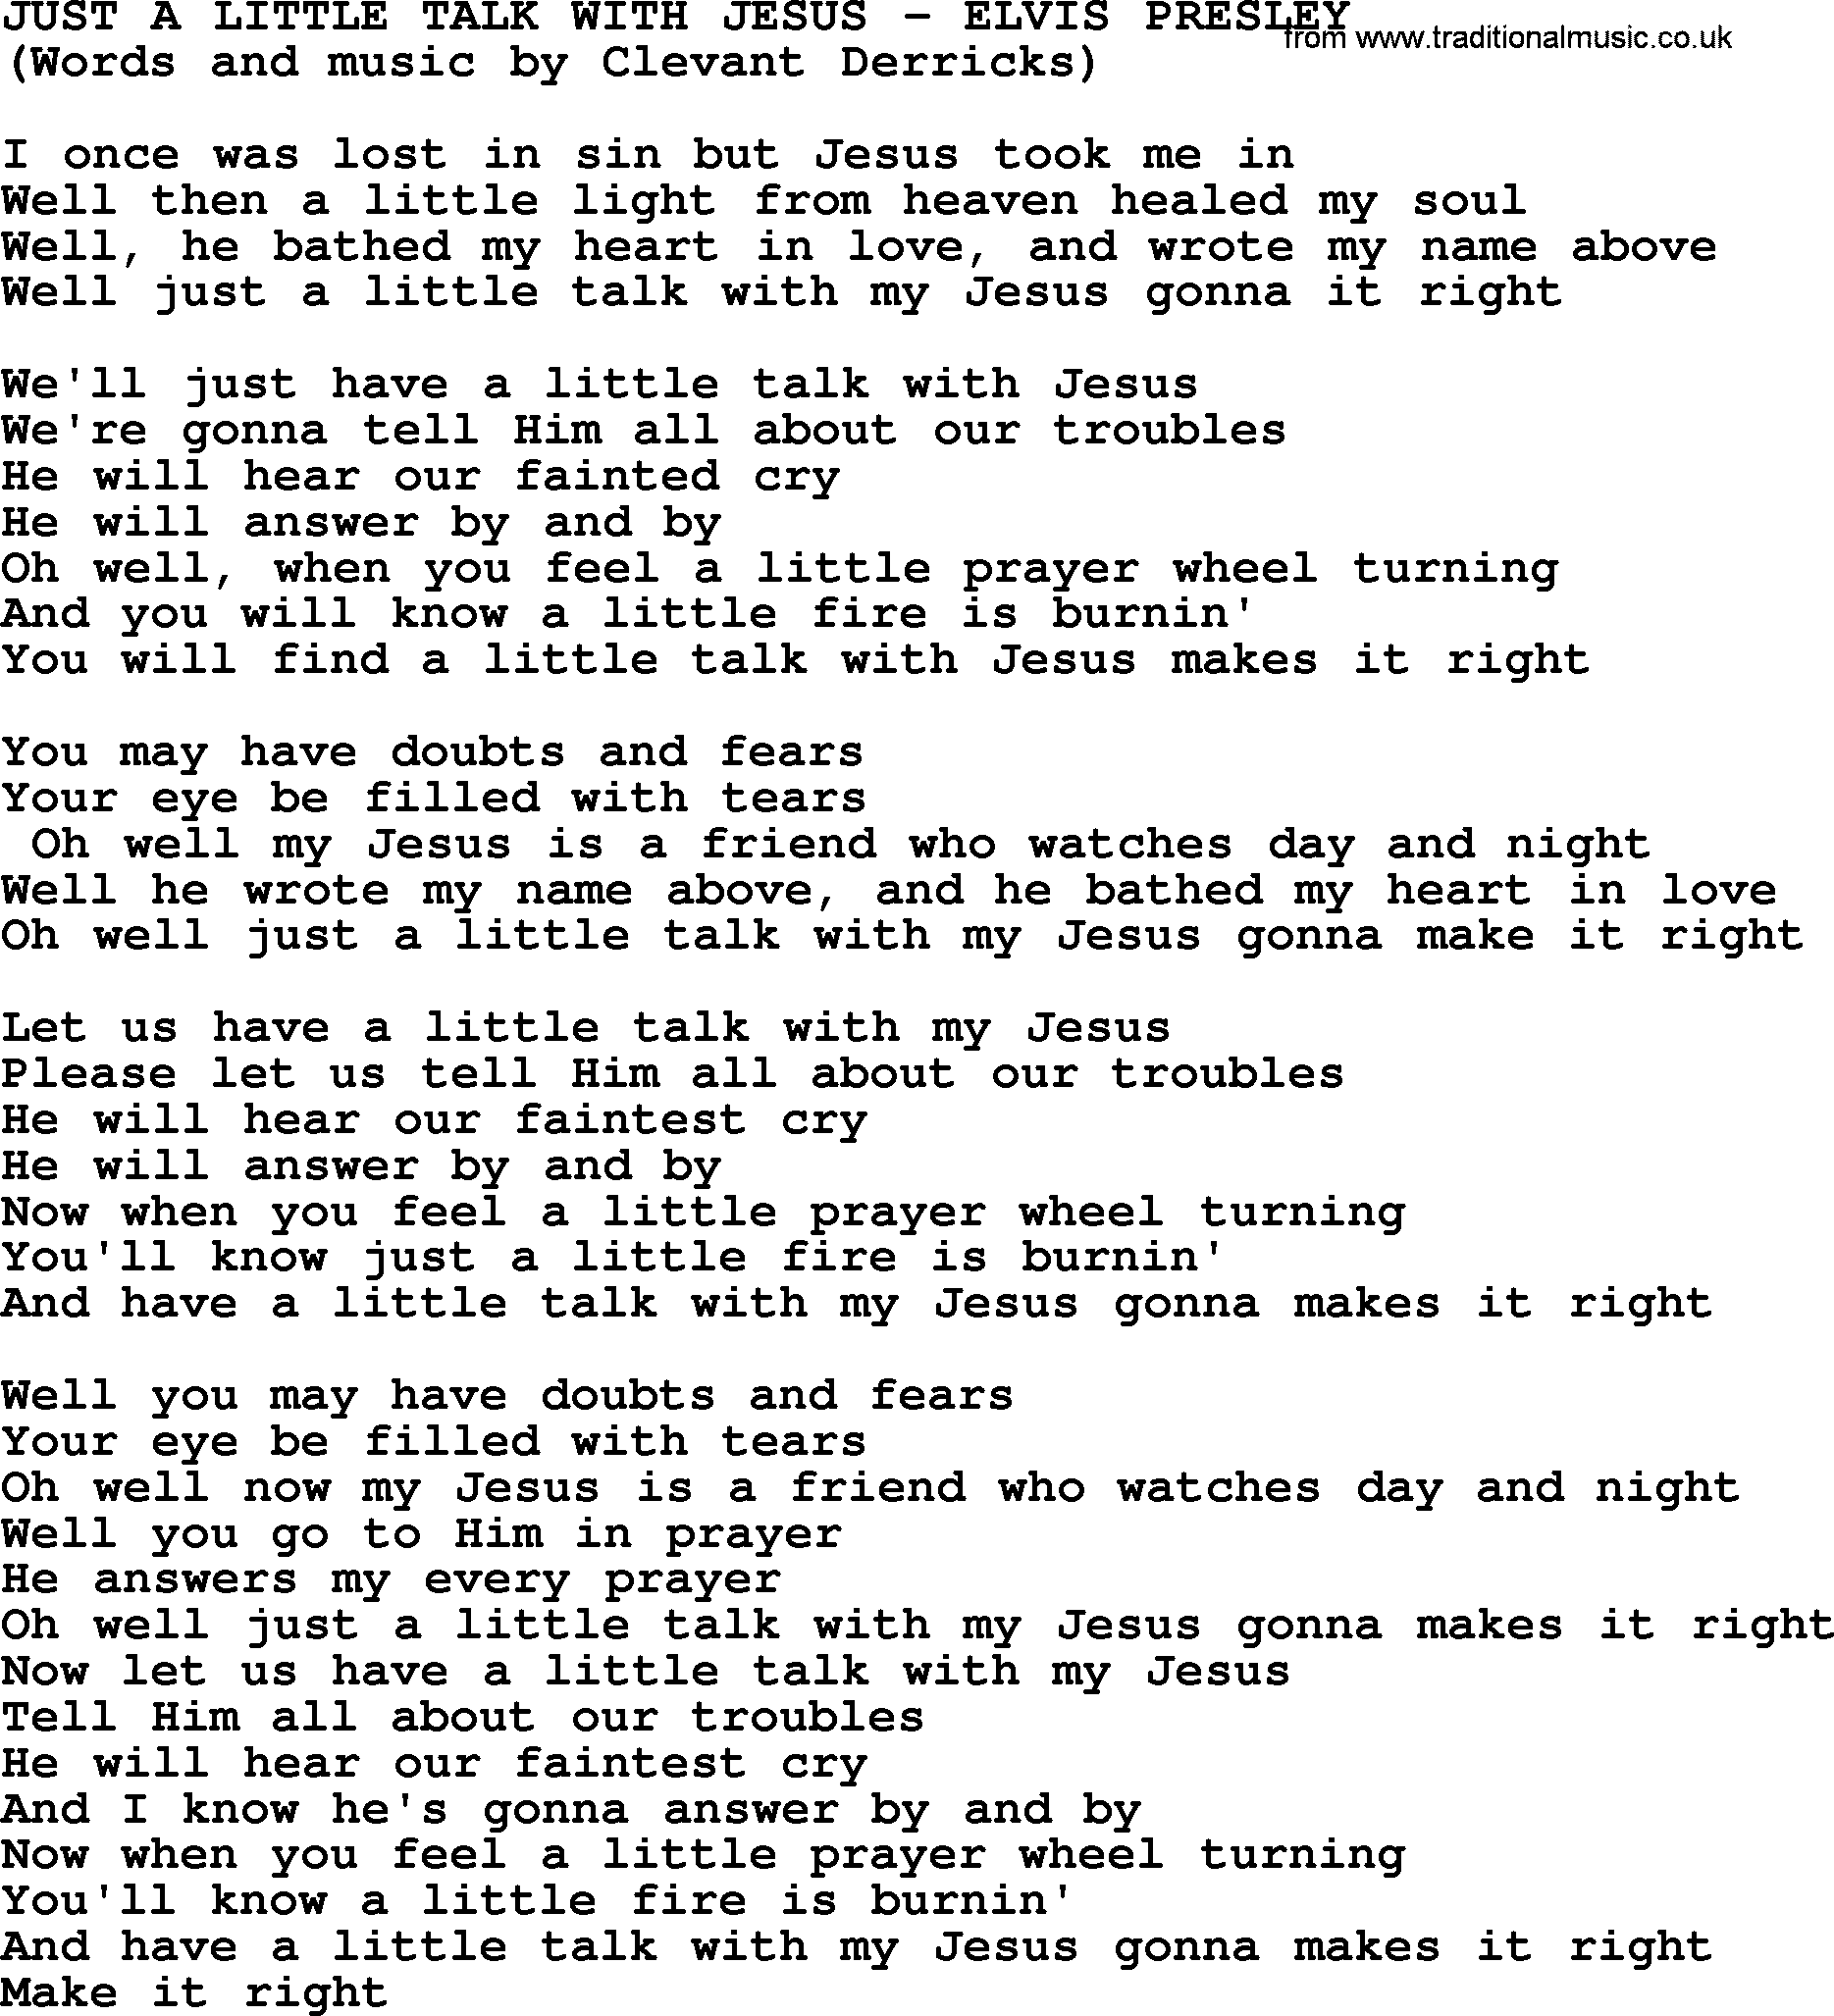 Just A Little Talk With Jesus by Elvis Presley - lyrics